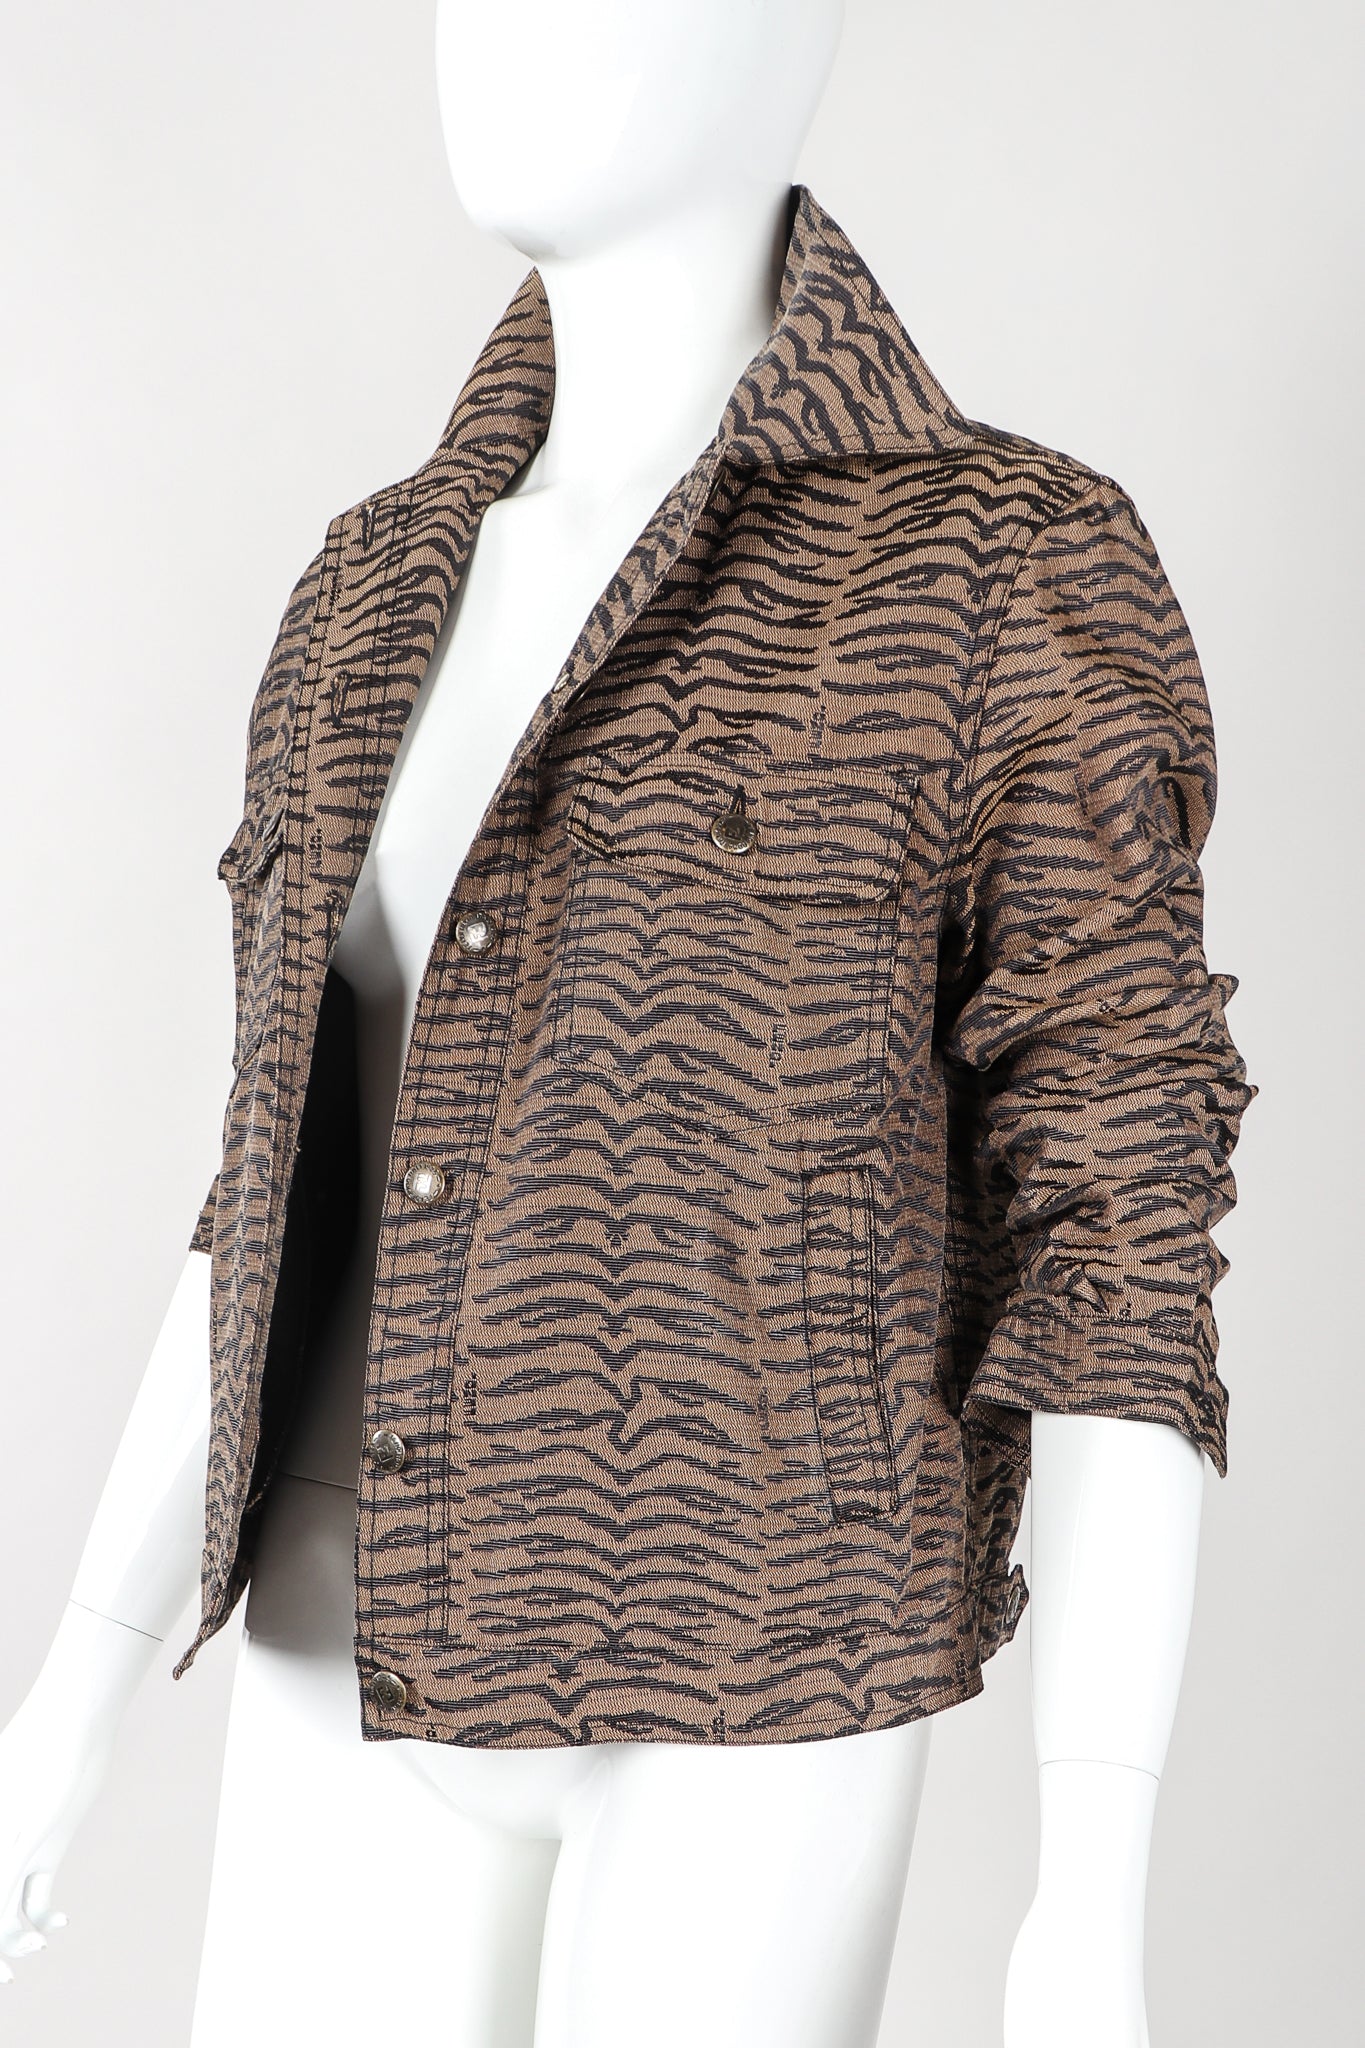 Recess Vintage Fendi Brown Tiger Twill Jean Jacket unbuttoned on Mannequin